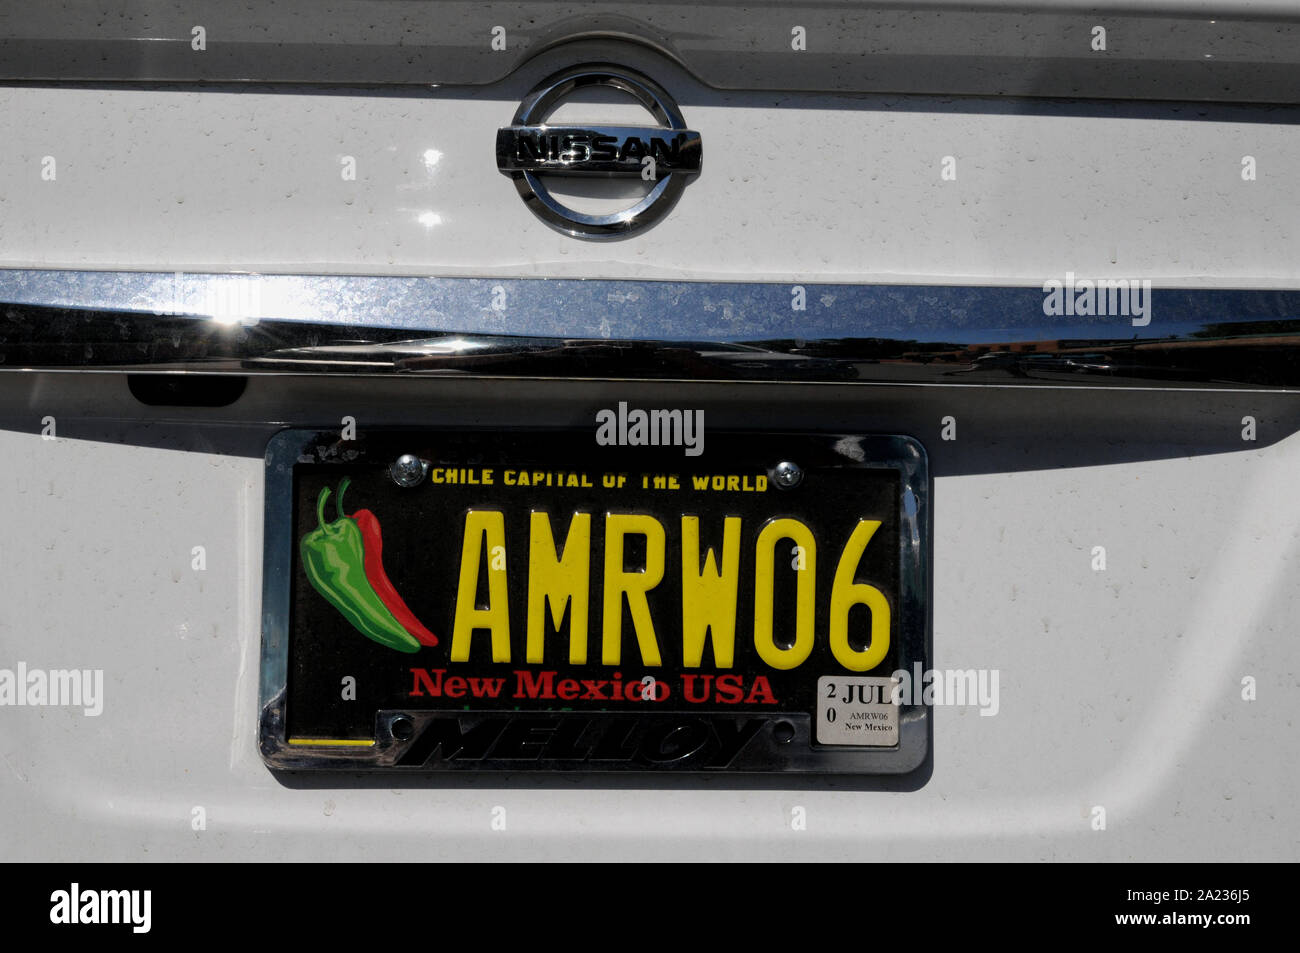 Ein Auto Kennzeichen in Taos, New Mexico resümiert Obsession des Staates mit Chili. Stockfoto